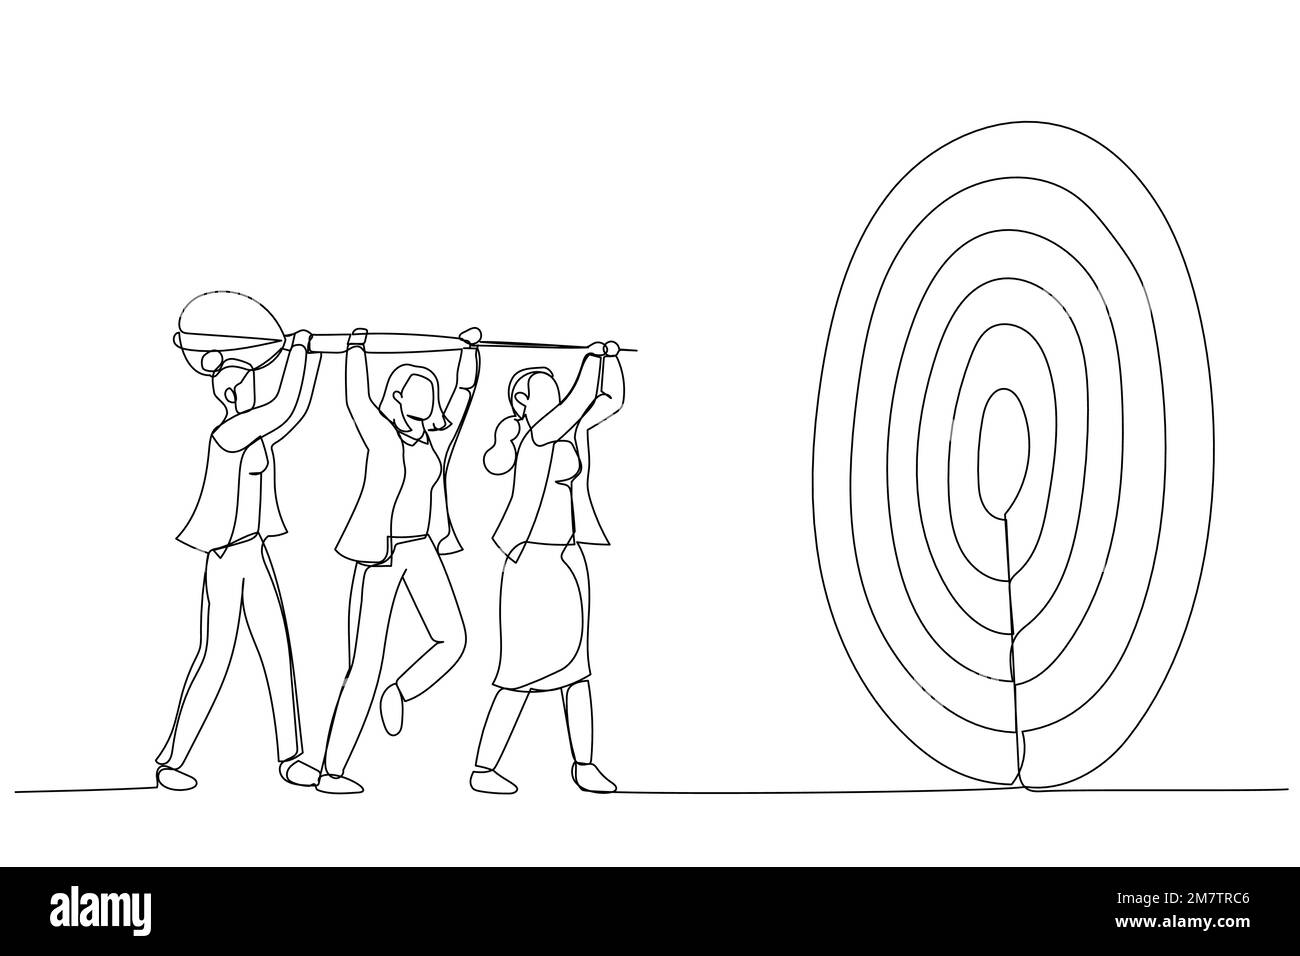 Illustration of businesswoman help holding dart aiming on bullseye target. Metaphor for team goal, teamwork collaboration. Single line art style Stock Vector